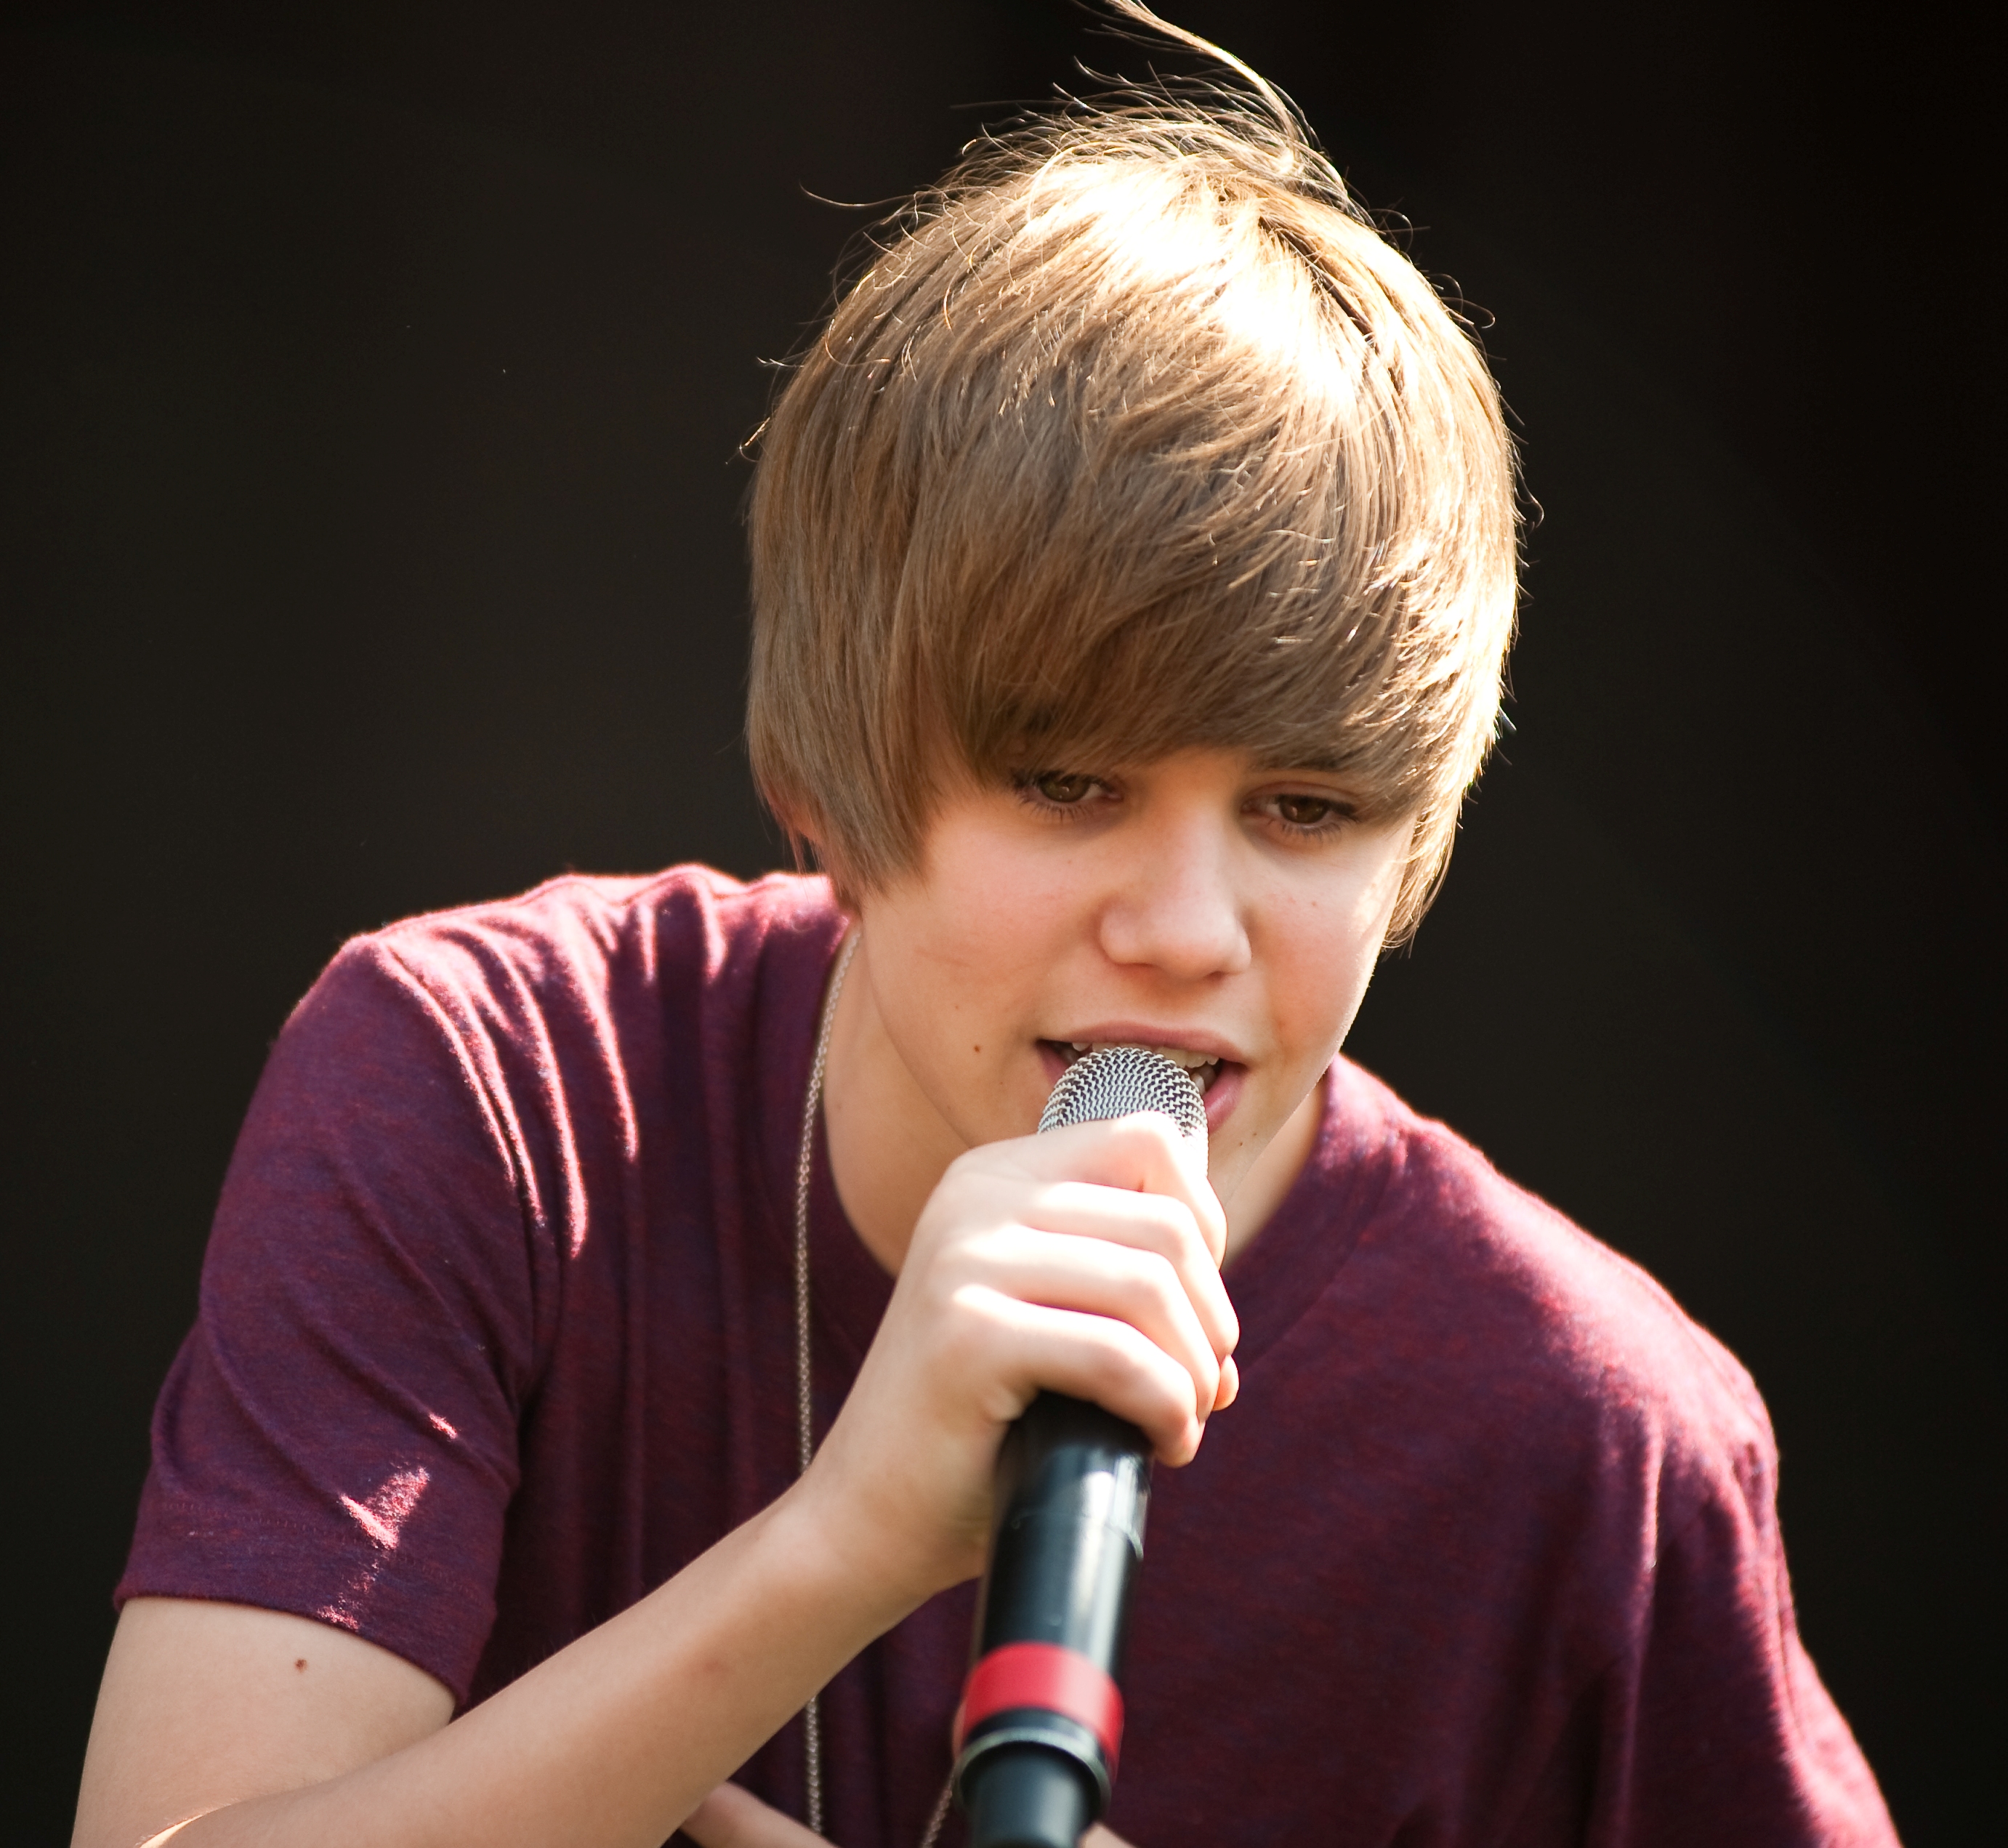 File:Justin Bieber 2010 4.jpg - Wikimedia Commons